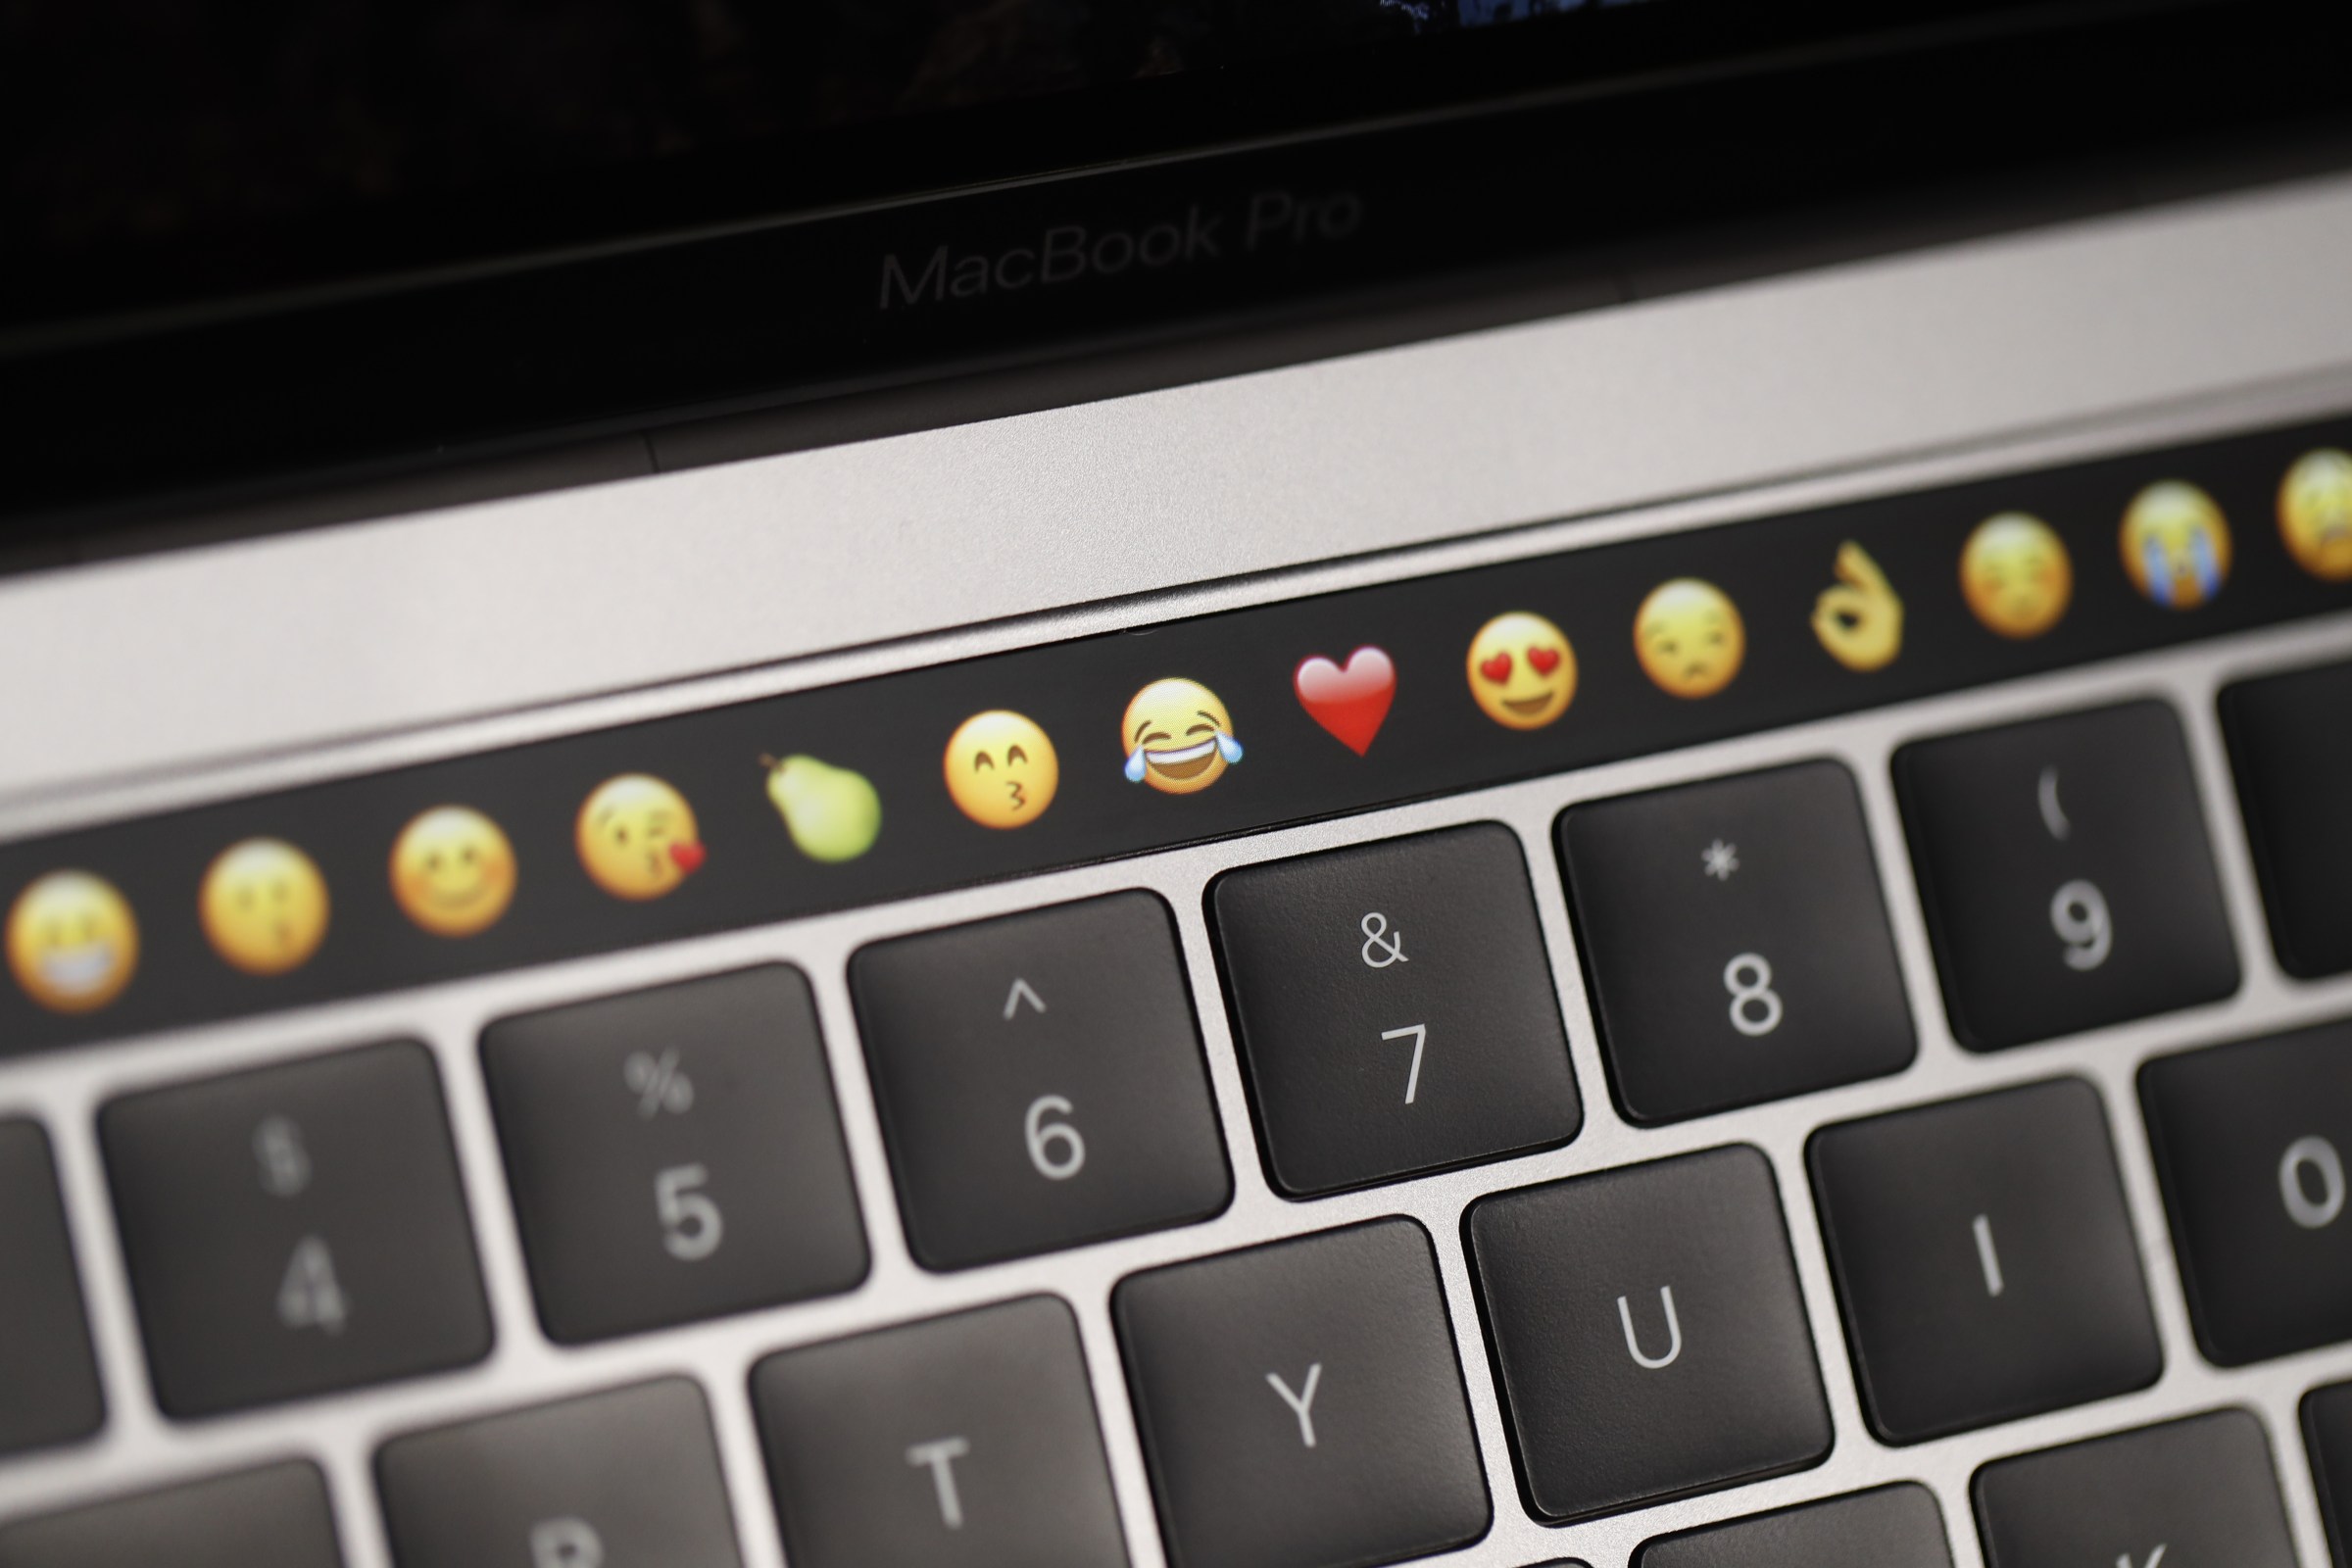 An Apple MacBook Pro’s task bar displaying emojis above its keyboard.